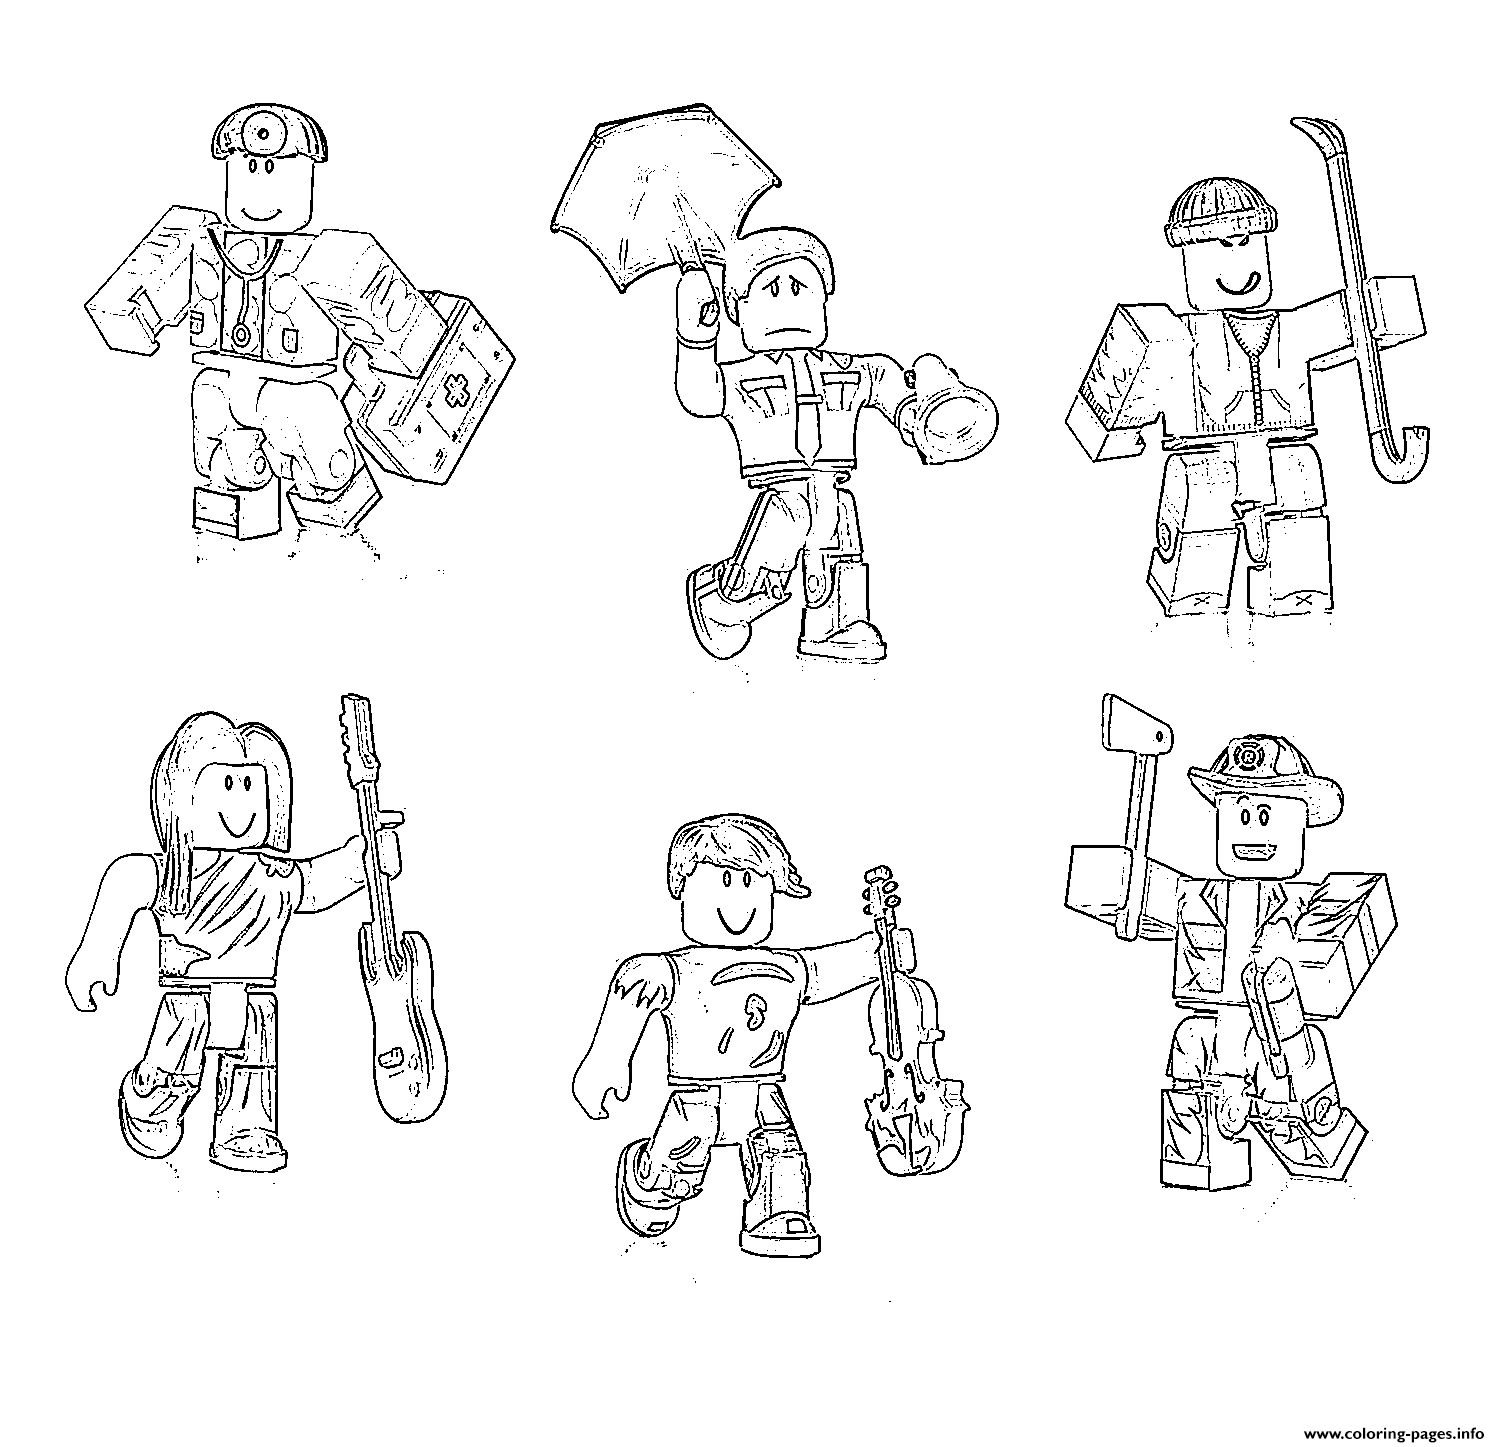 Roblox Characters Coloring Page Printable avec Dessin À Imprimer Roblox